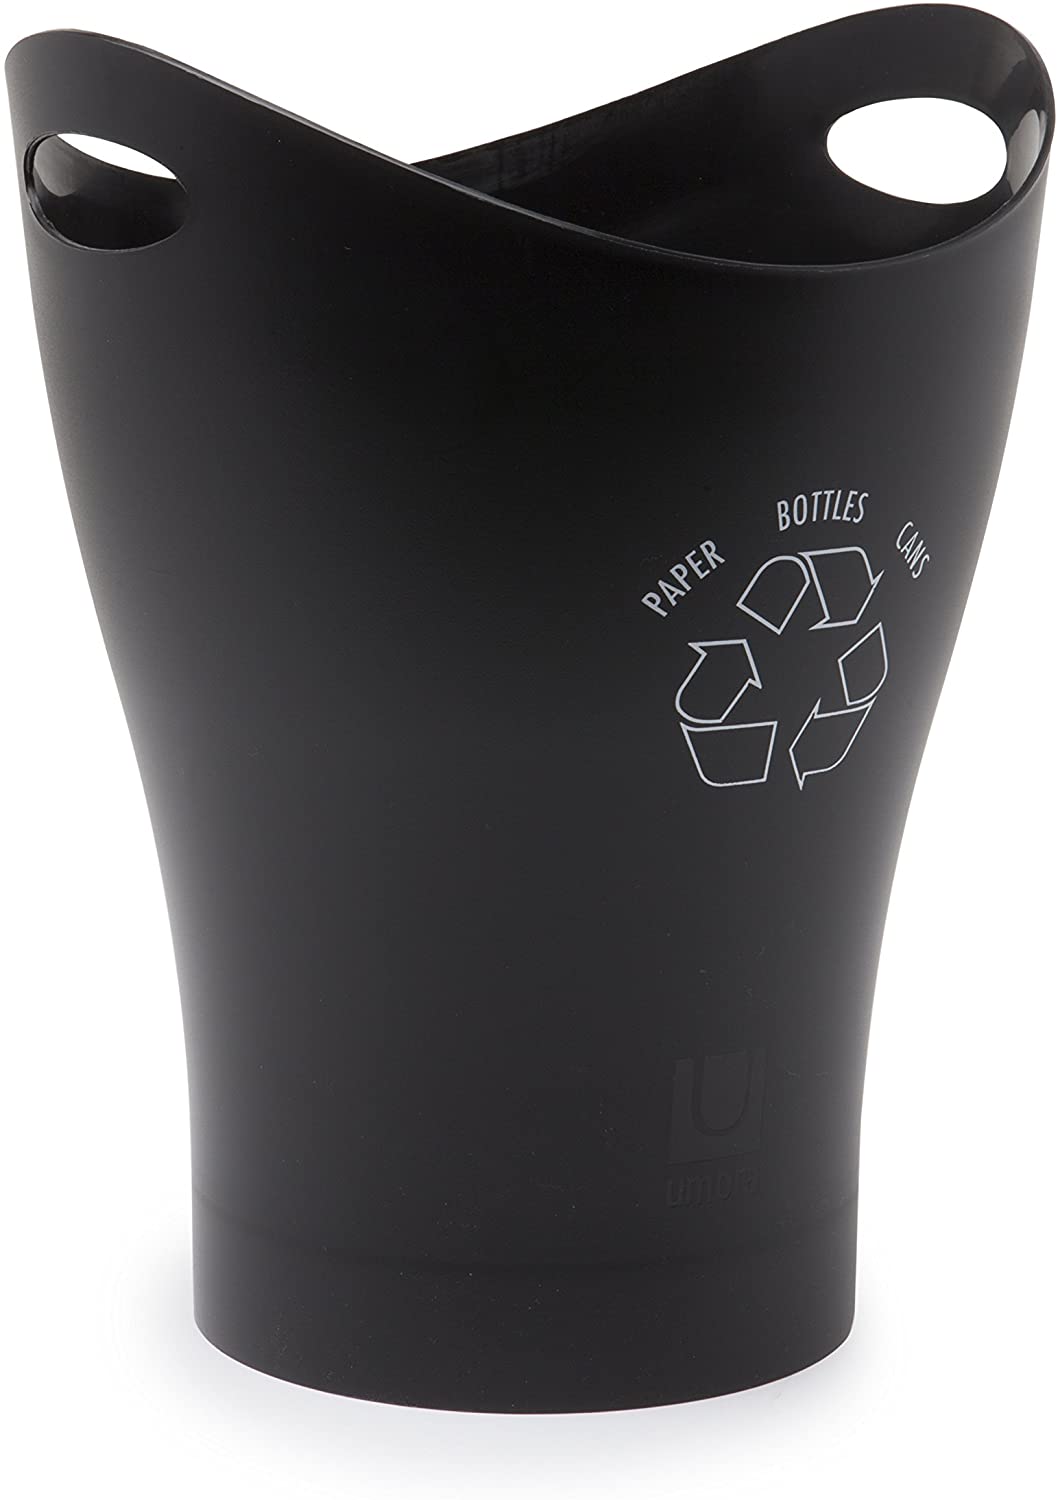 Umbra Garbino Labelled Recycling Bin, 9-Liter